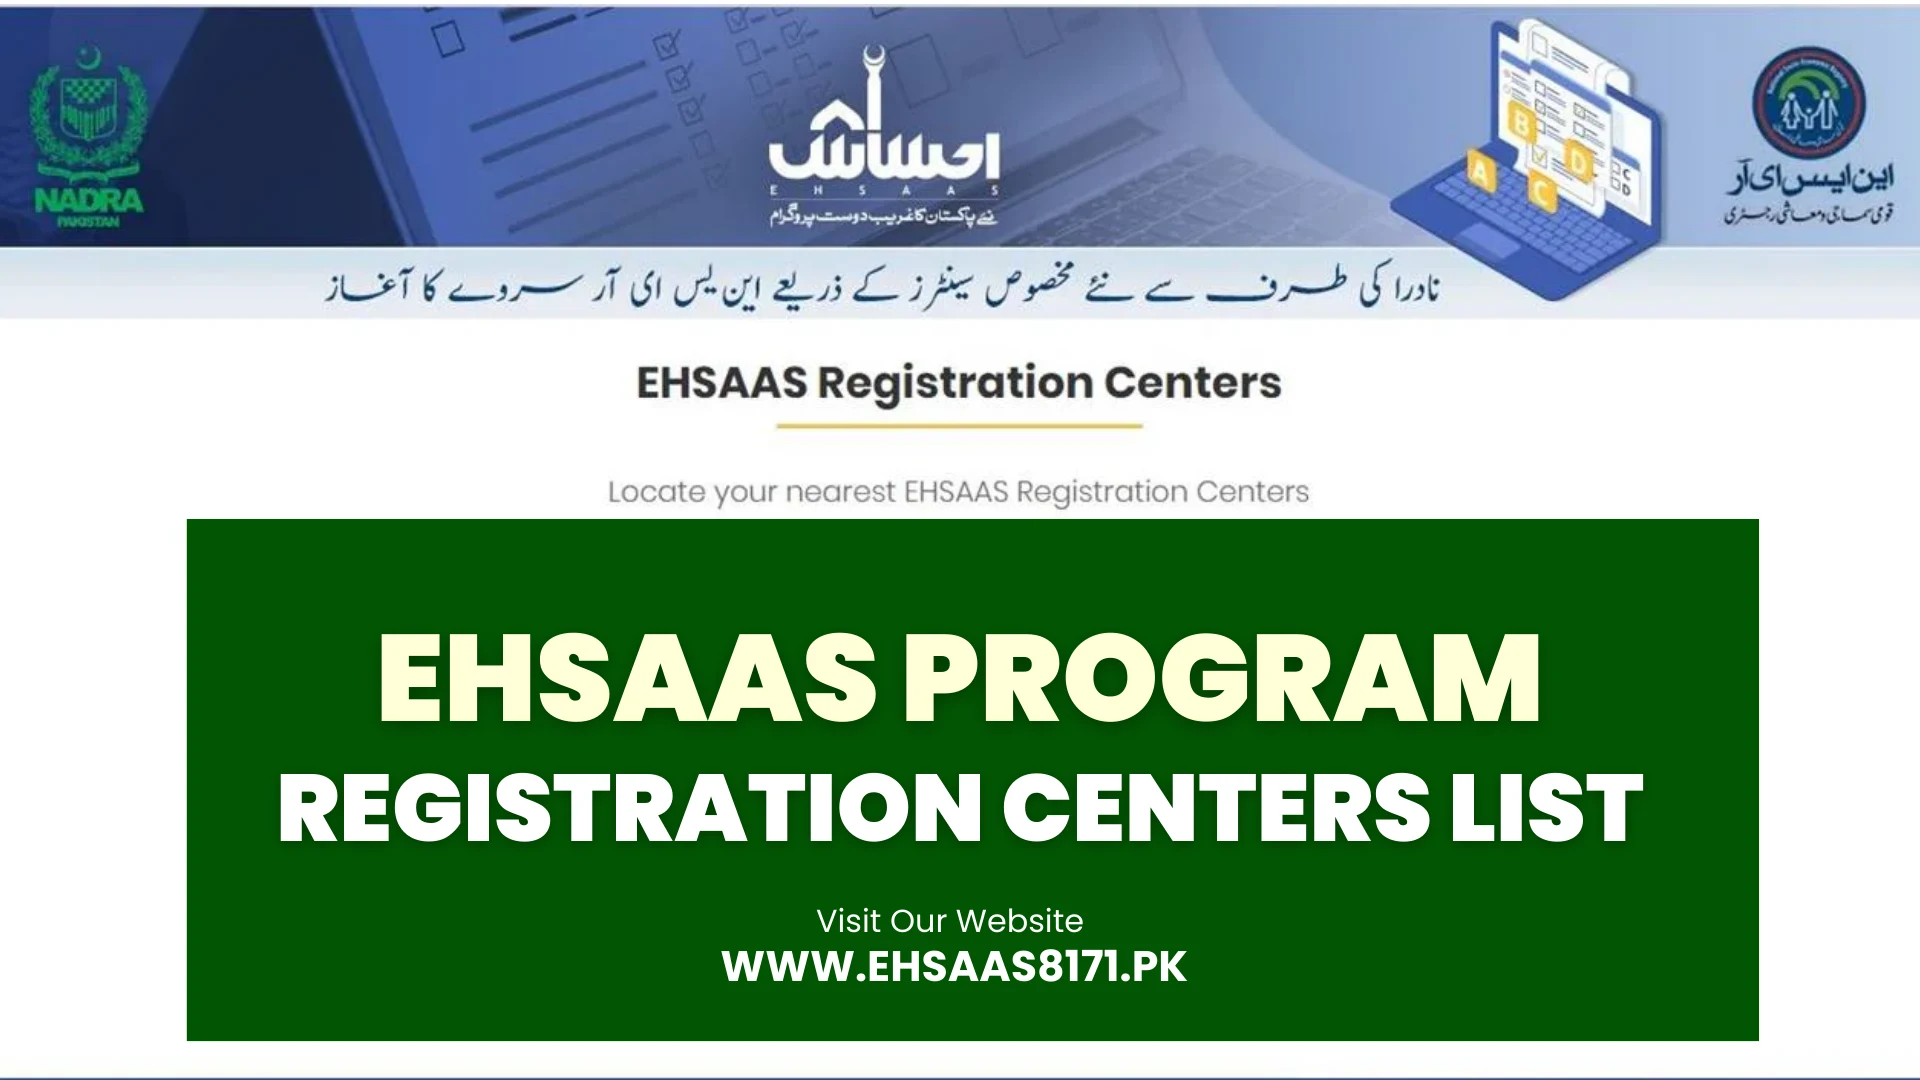 Ehsaas Program Registration Centers List